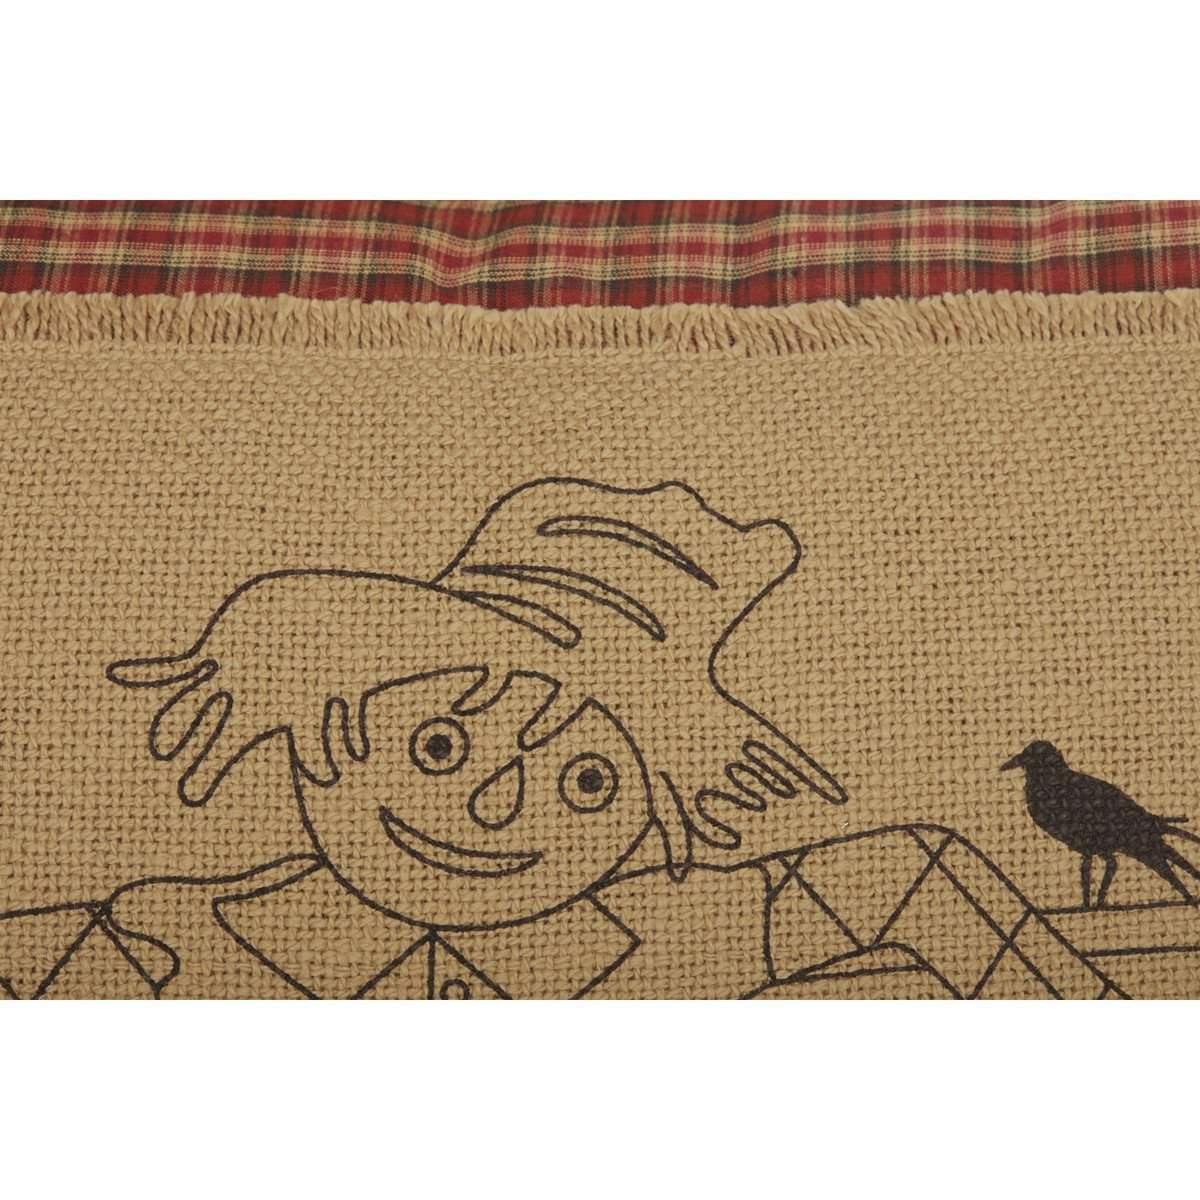 Landon Scarecrow Pillow 18x18 VHC Brands zoom